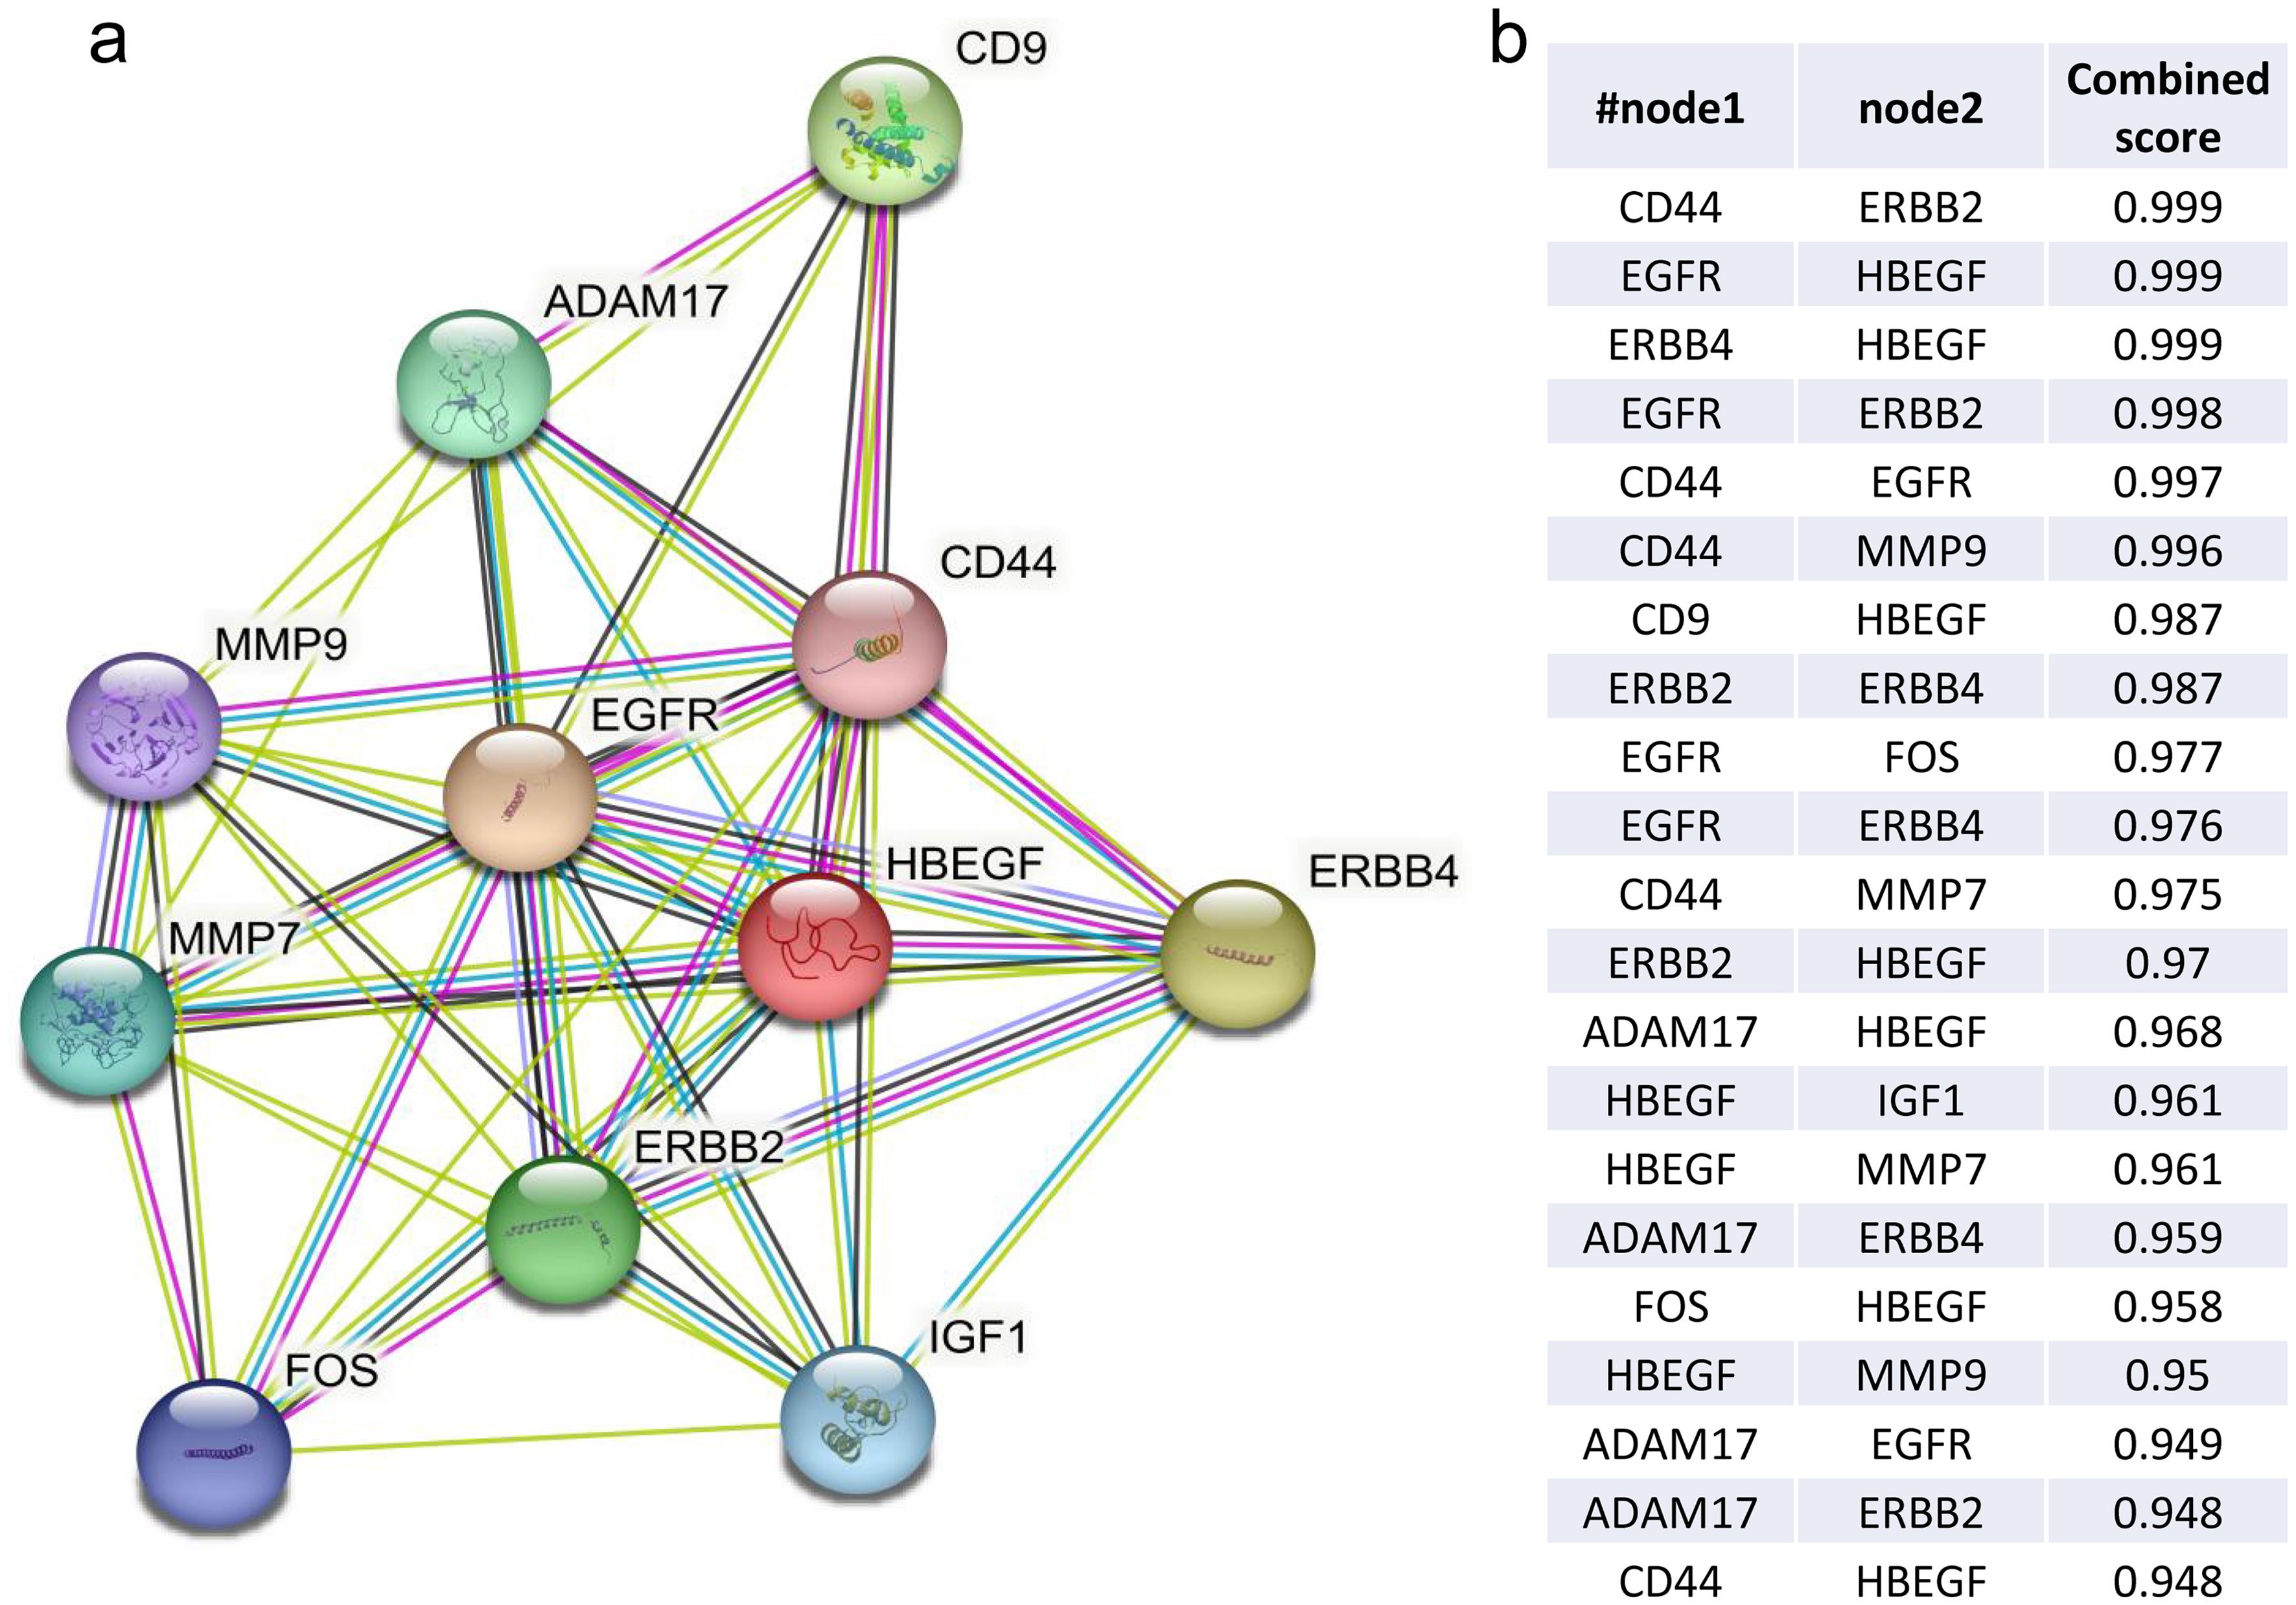 HBEGF protein interaction correlation diagram.